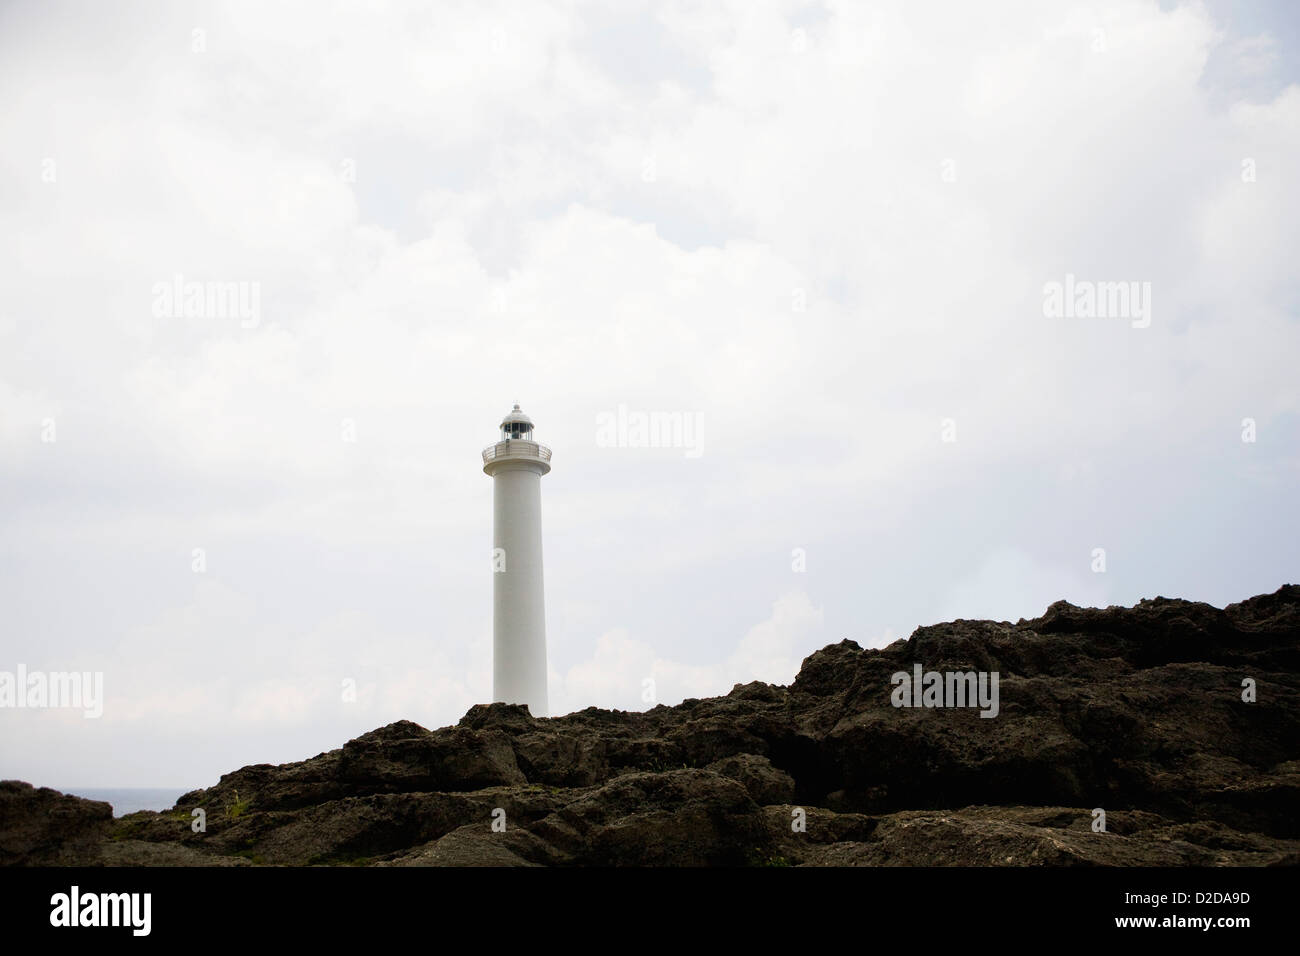 Lighthouse at Cape Zampa in Okinawa, Japan Stock Photo